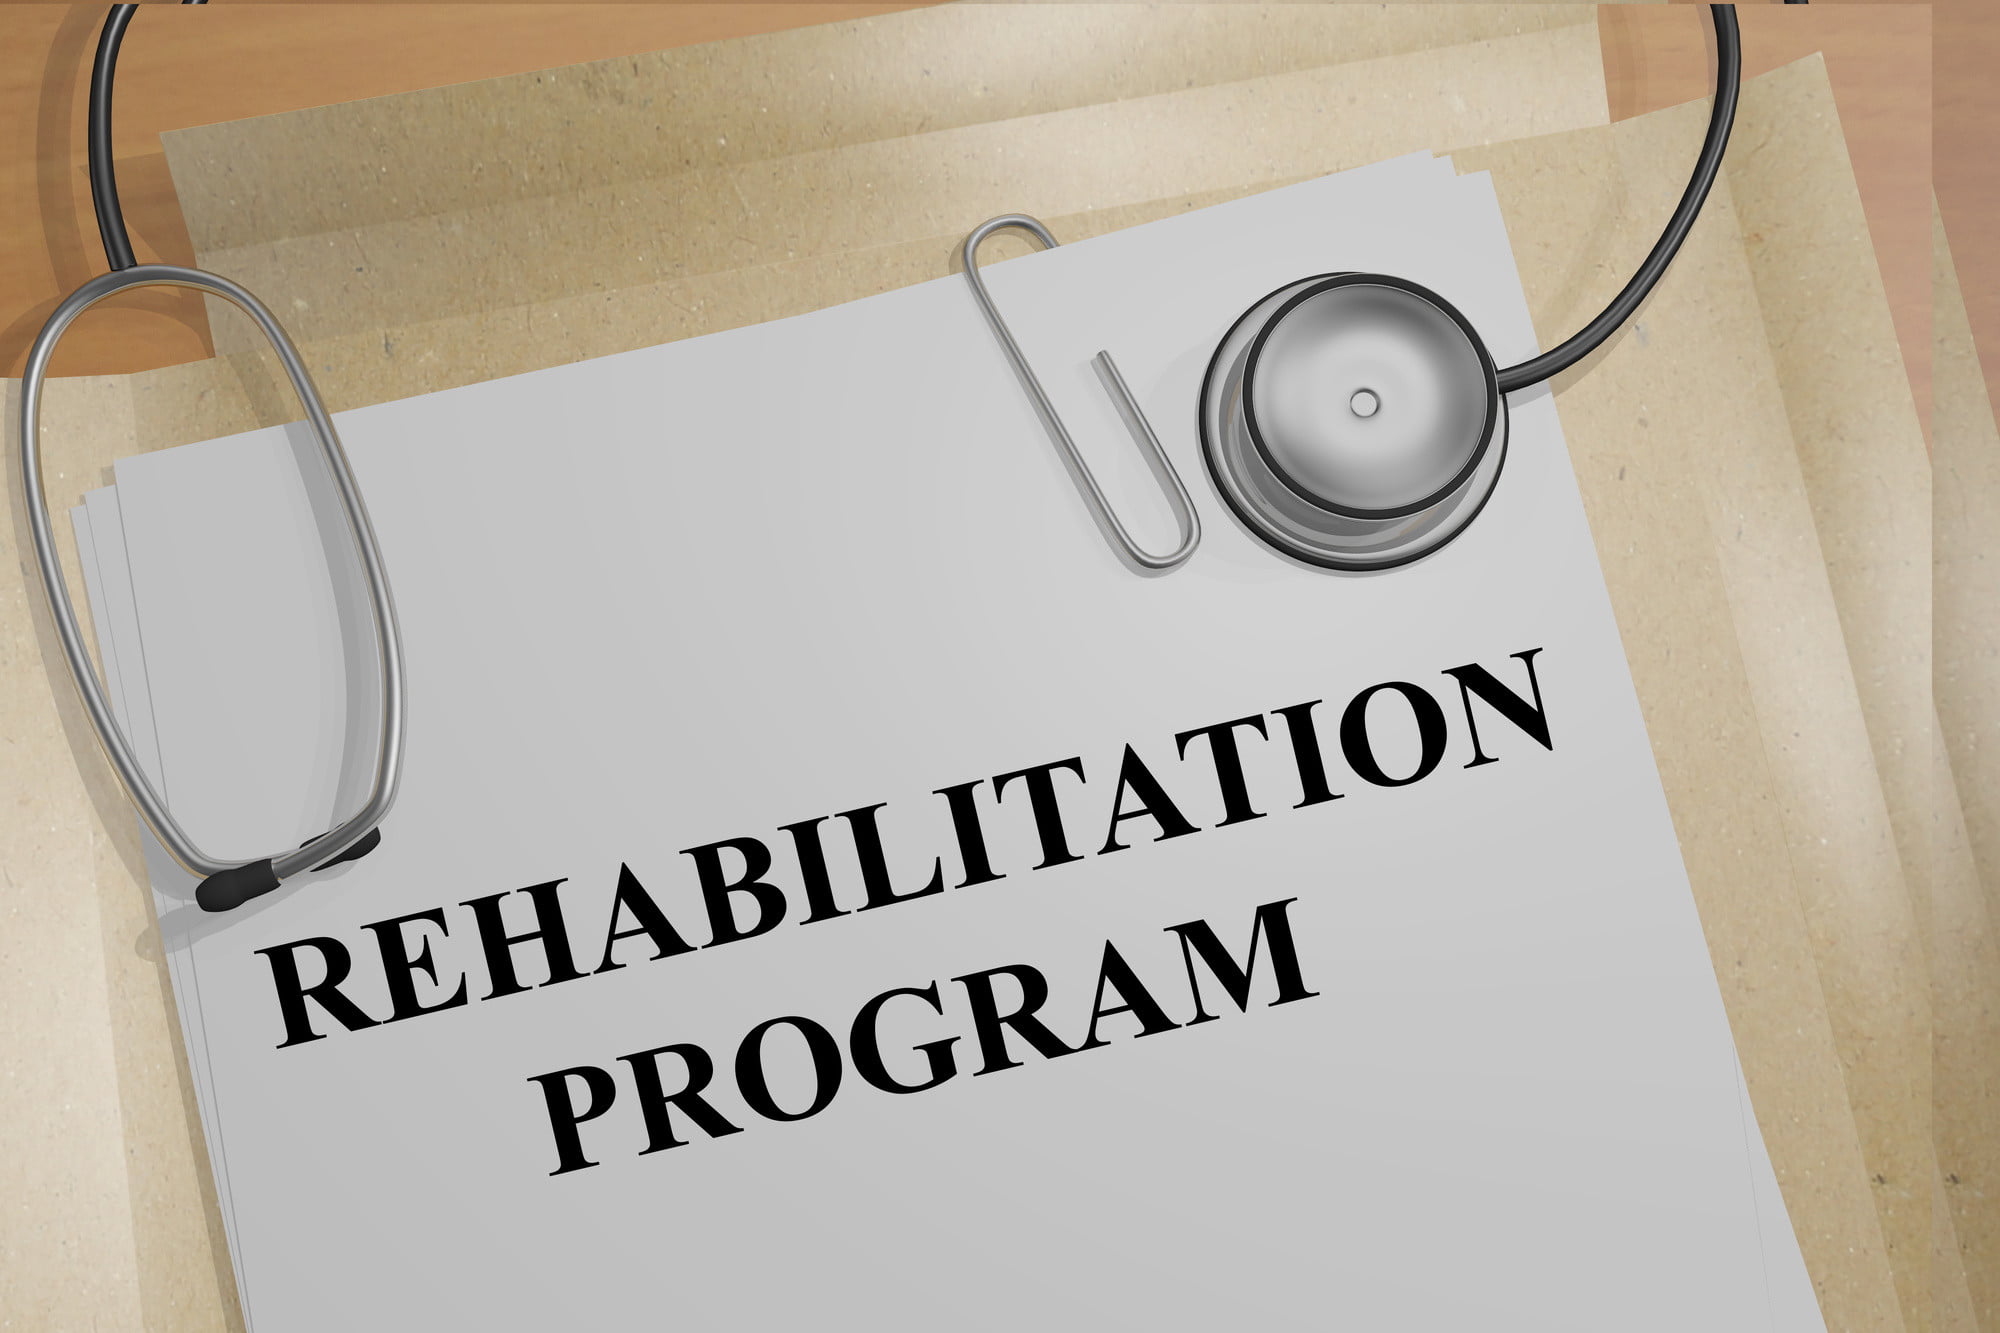 journey to recovery drug rehabilitation center